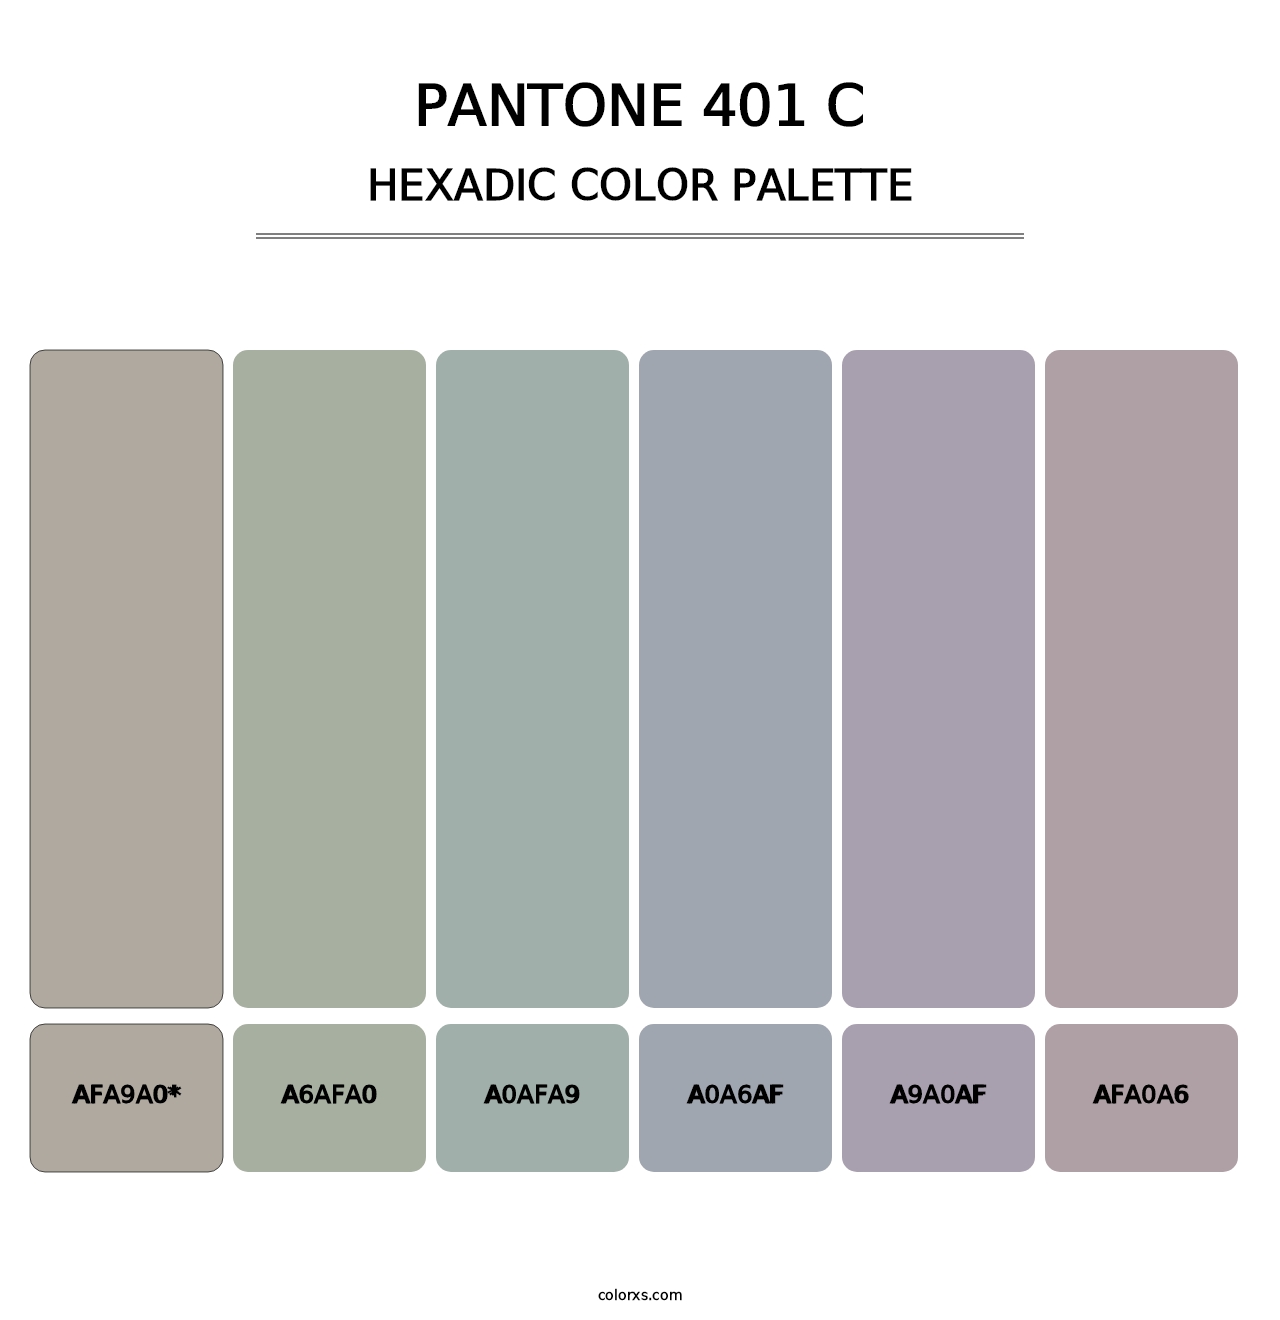 PANTONE 401 C - Hexadic Color Palette